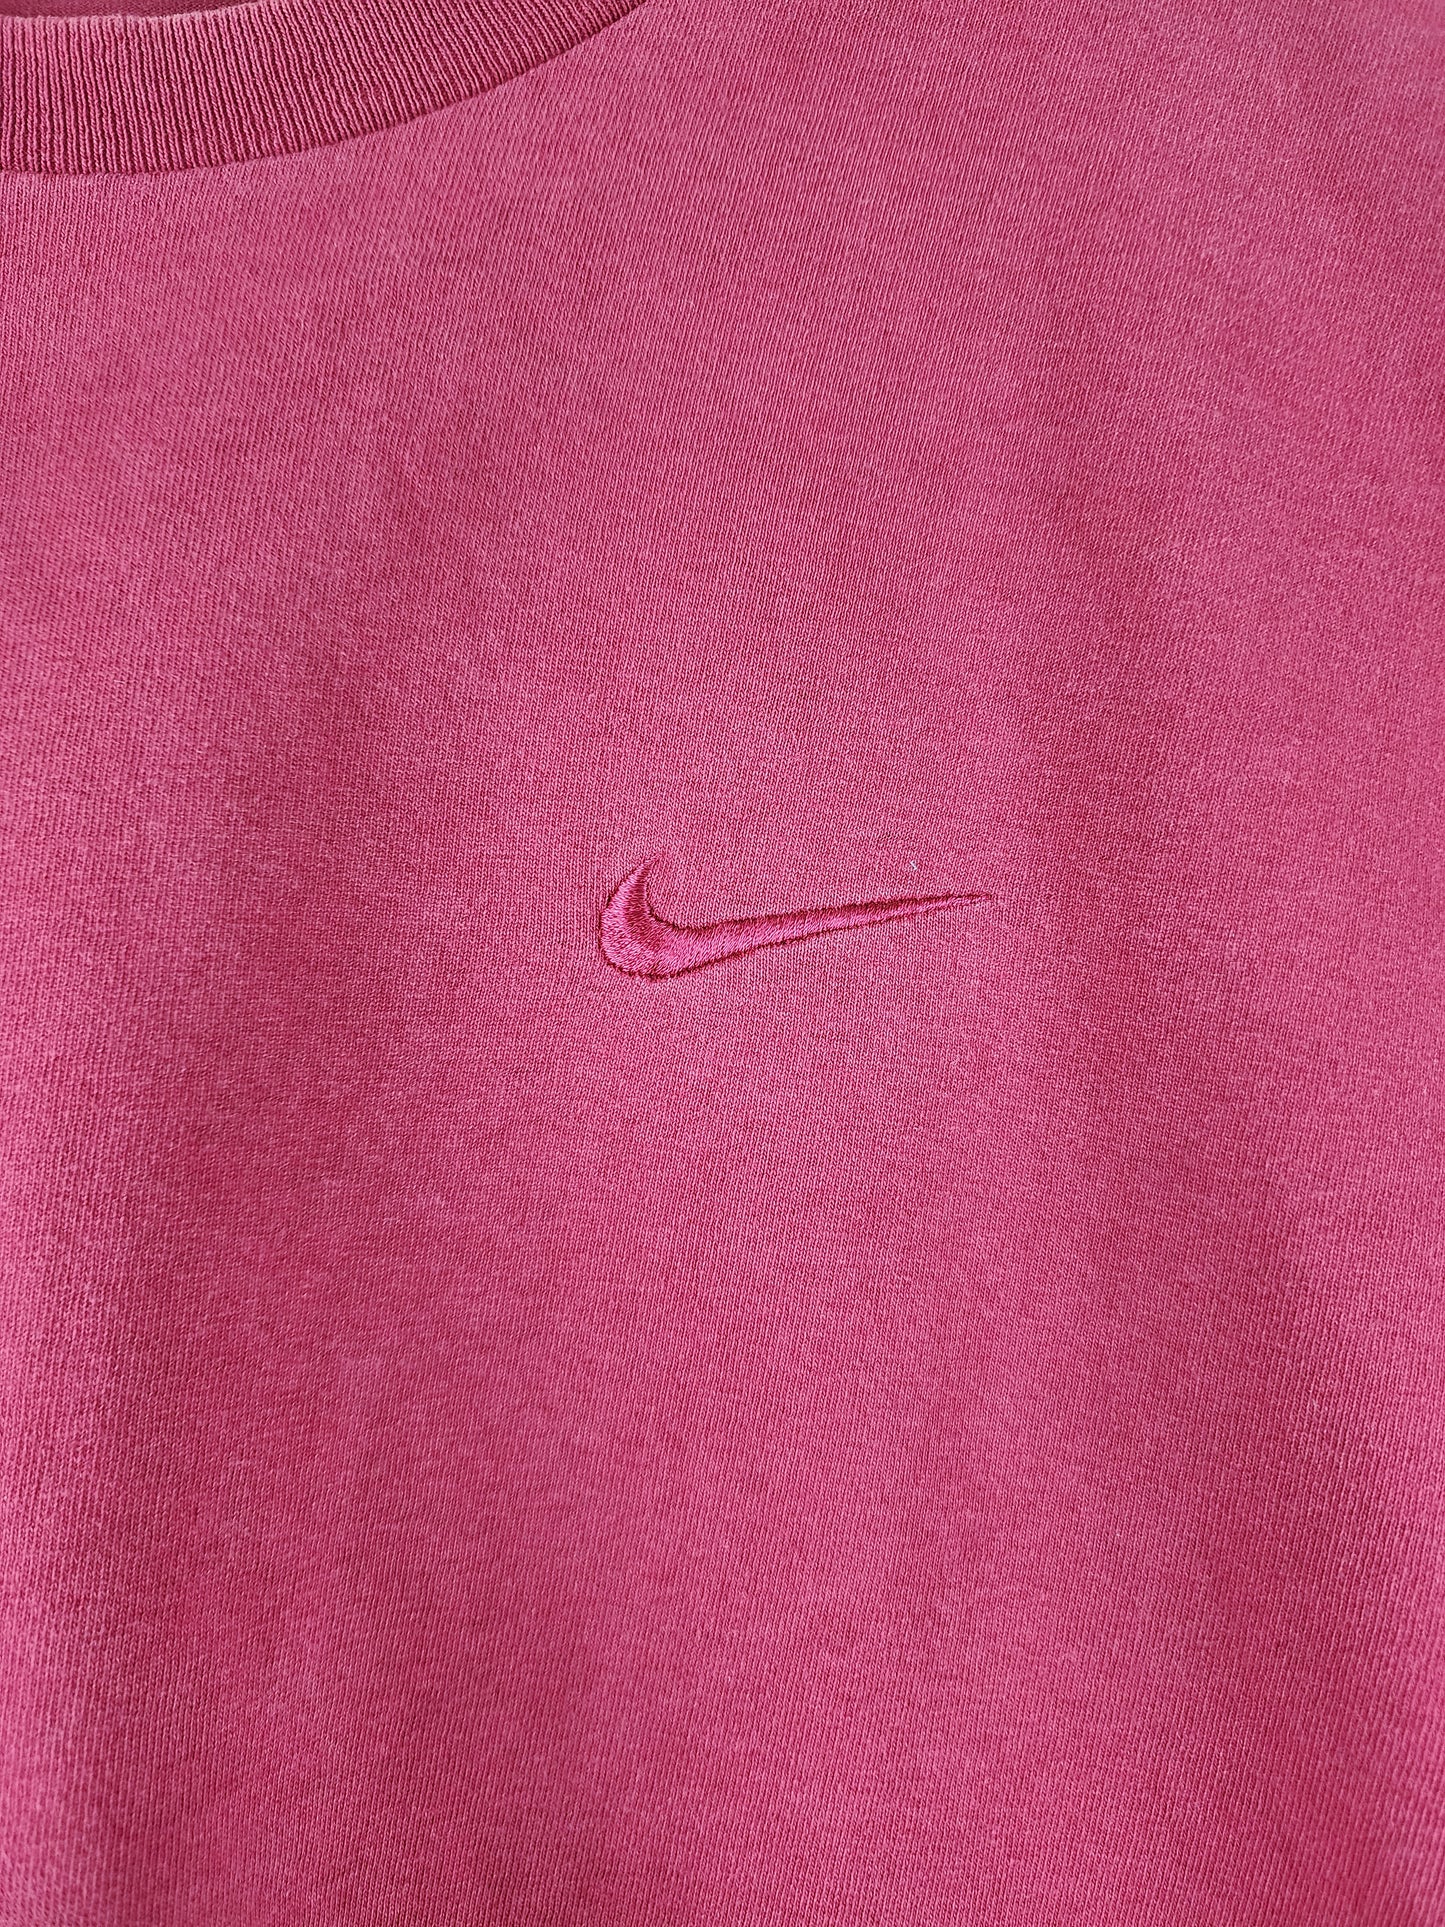 Vintage Nike Miniswoosh 90's tonal logo Made in USA Red T-shirt 